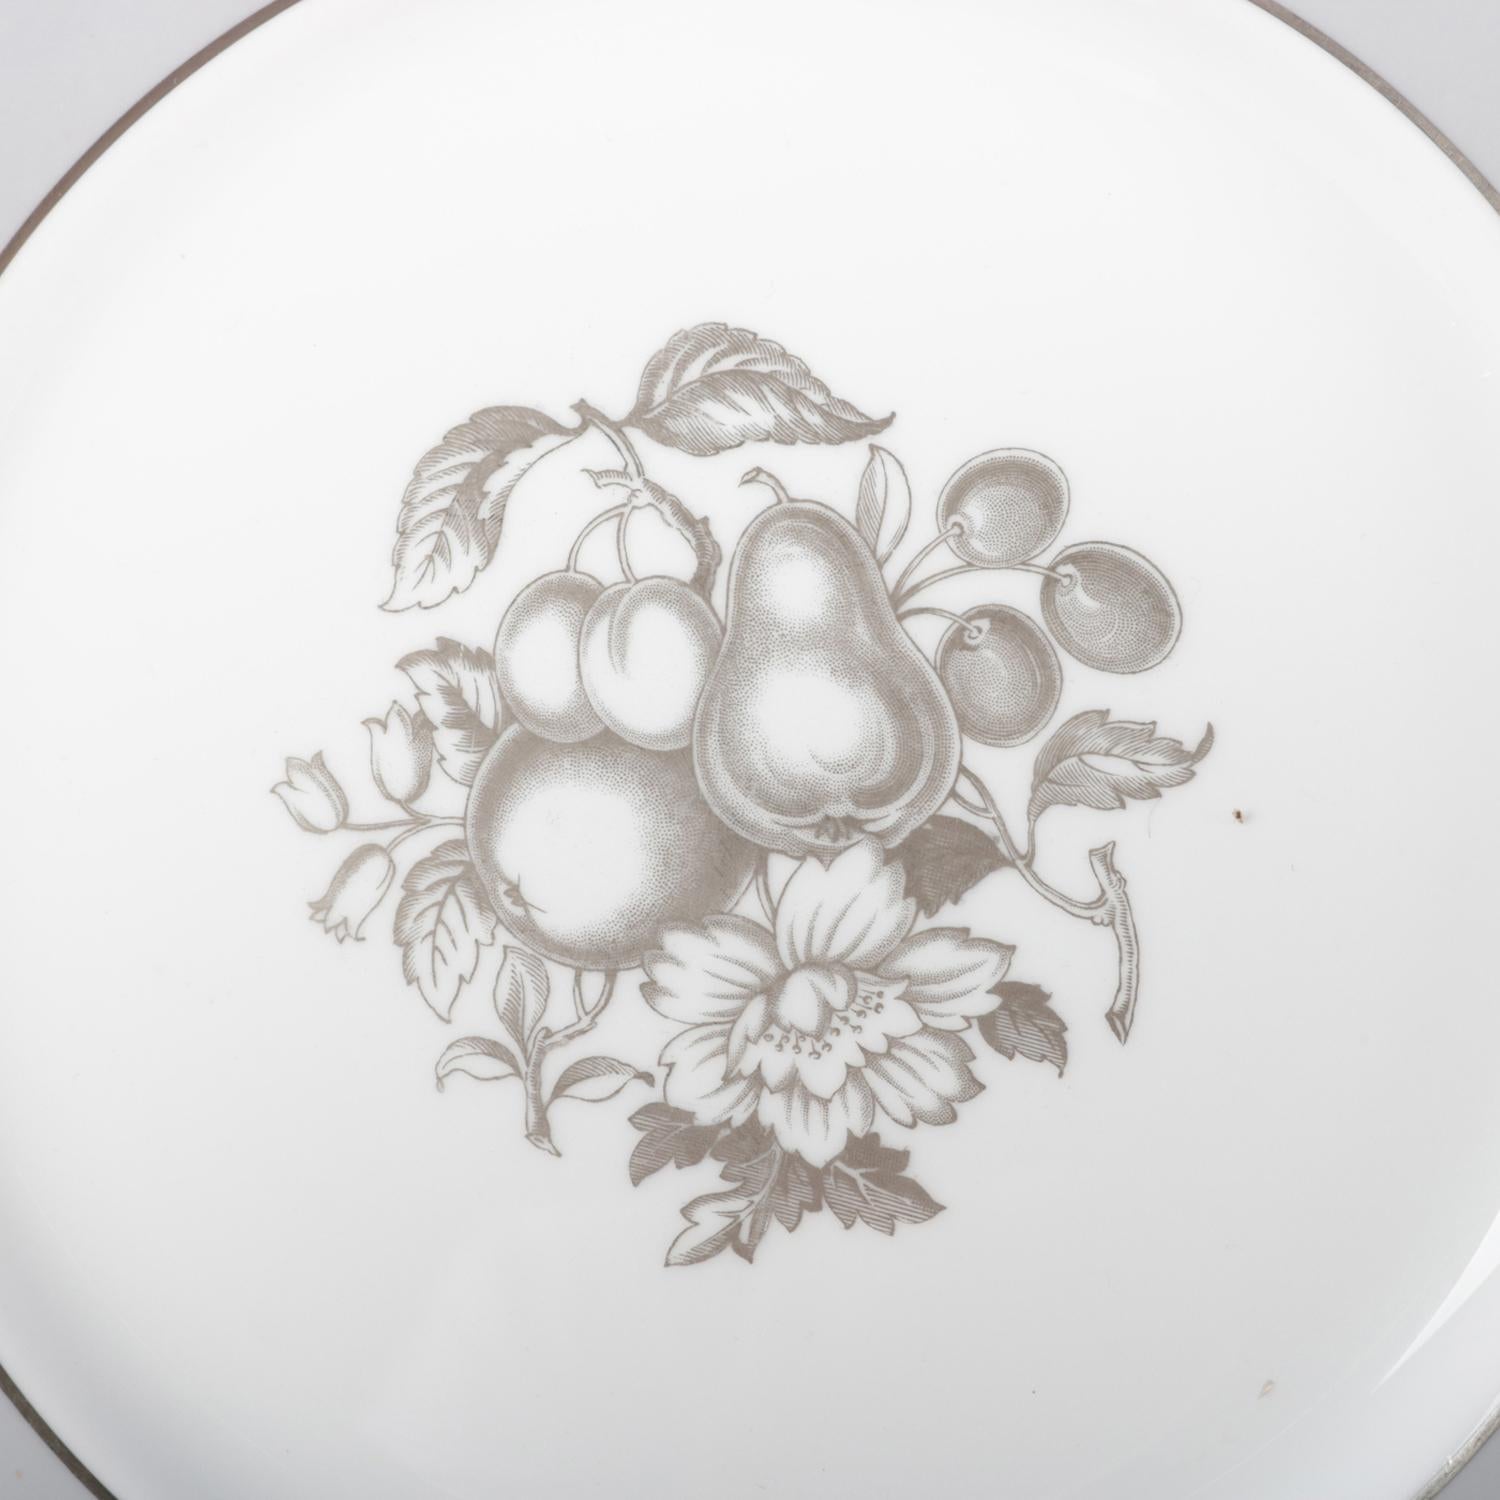 13 English Spode Multi-Colored Fruit Porcelain Dinner Plates, 20th Century 1